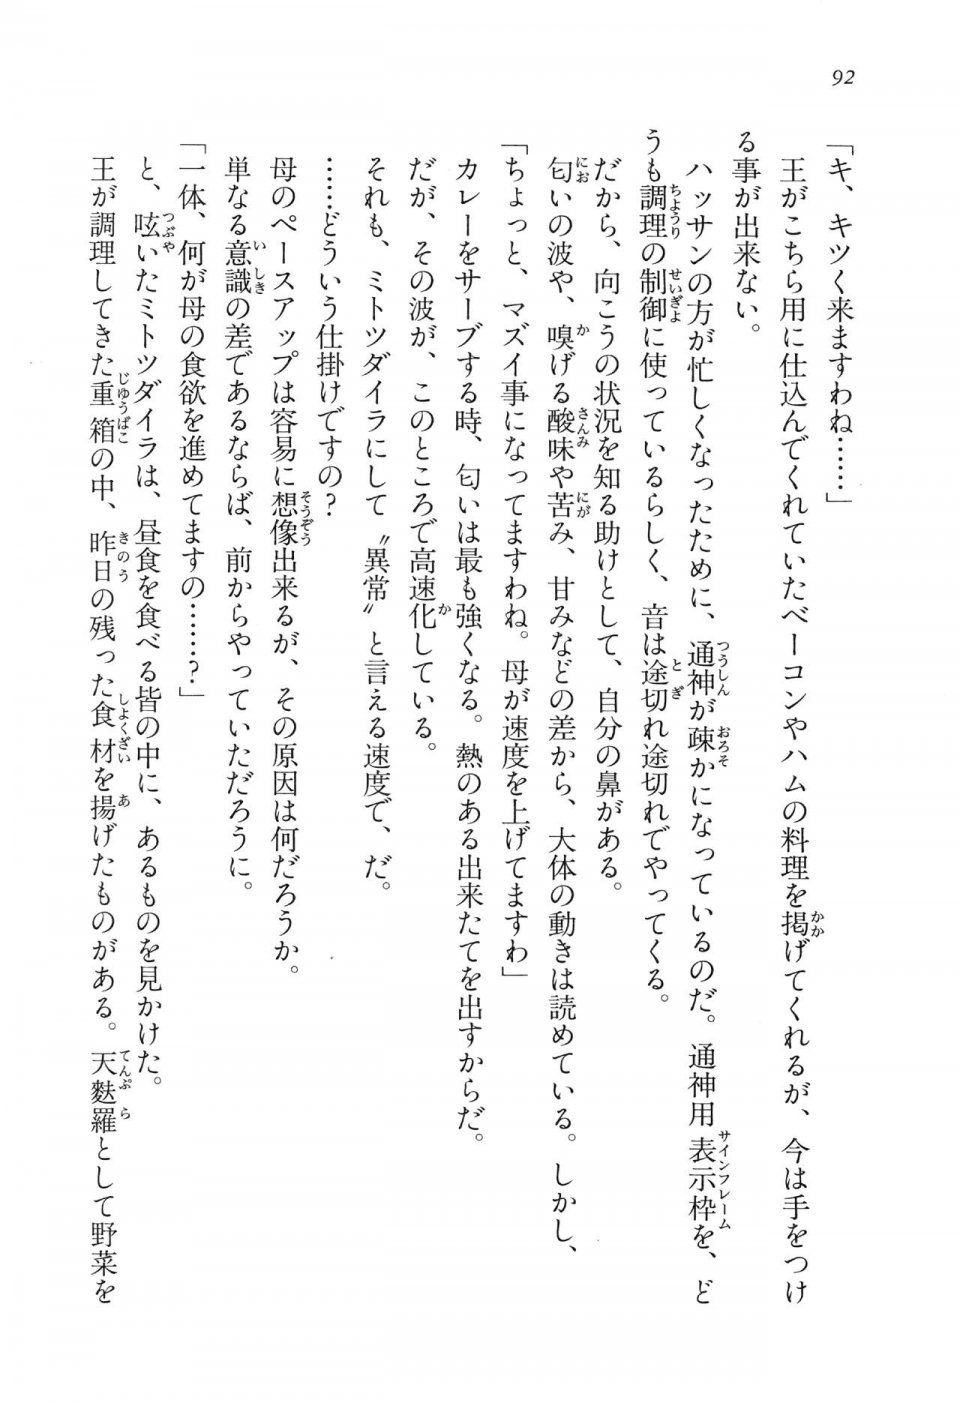 Kyoukai Senjou no Horizon LN Vol 15(6C) Part 1 - Photo #92